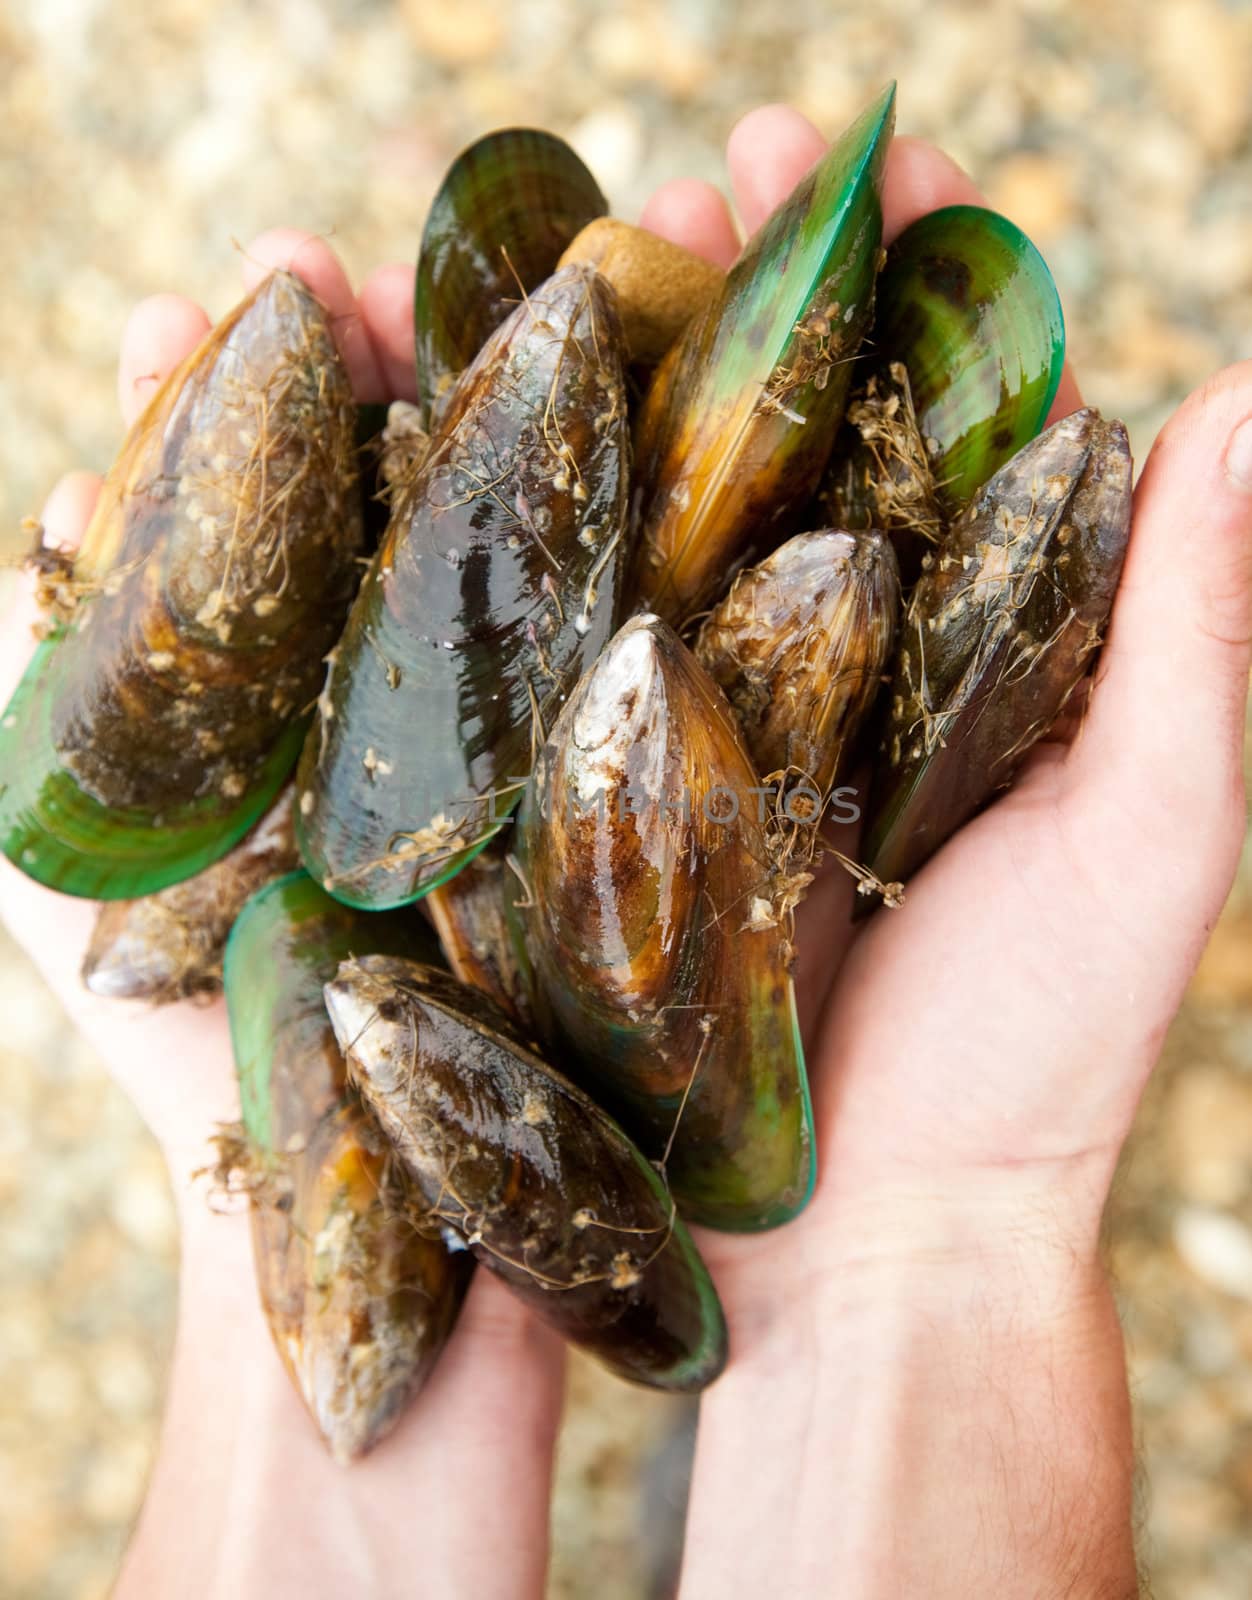 Hands holding fresh New Zealand green-lipped mussels, shallow focus